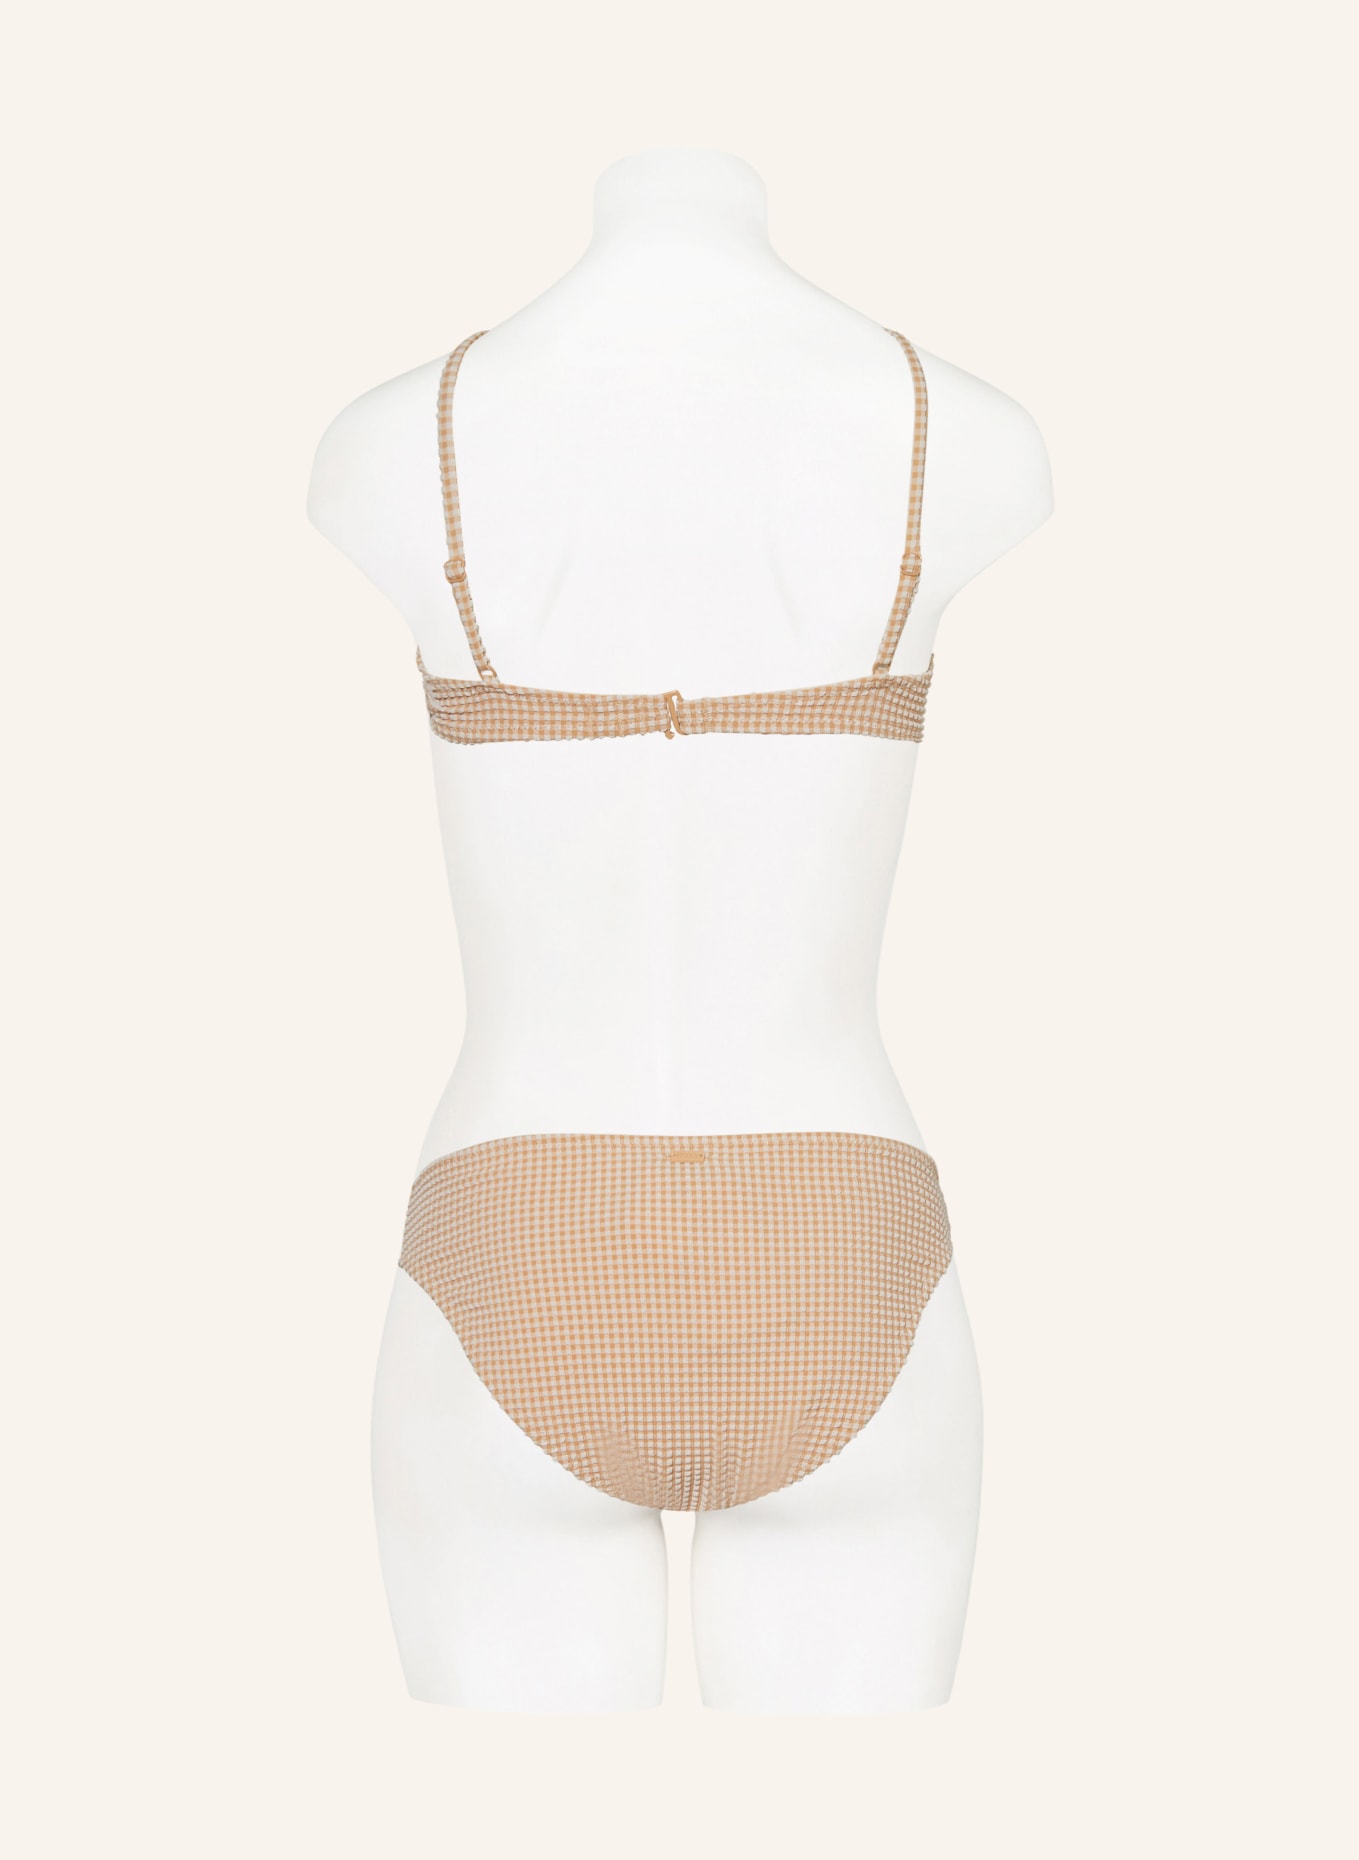 ROXY Bralette-Bikini-Top GINGHAM, Farbe: NUDE/ WEISS (Bild 3)